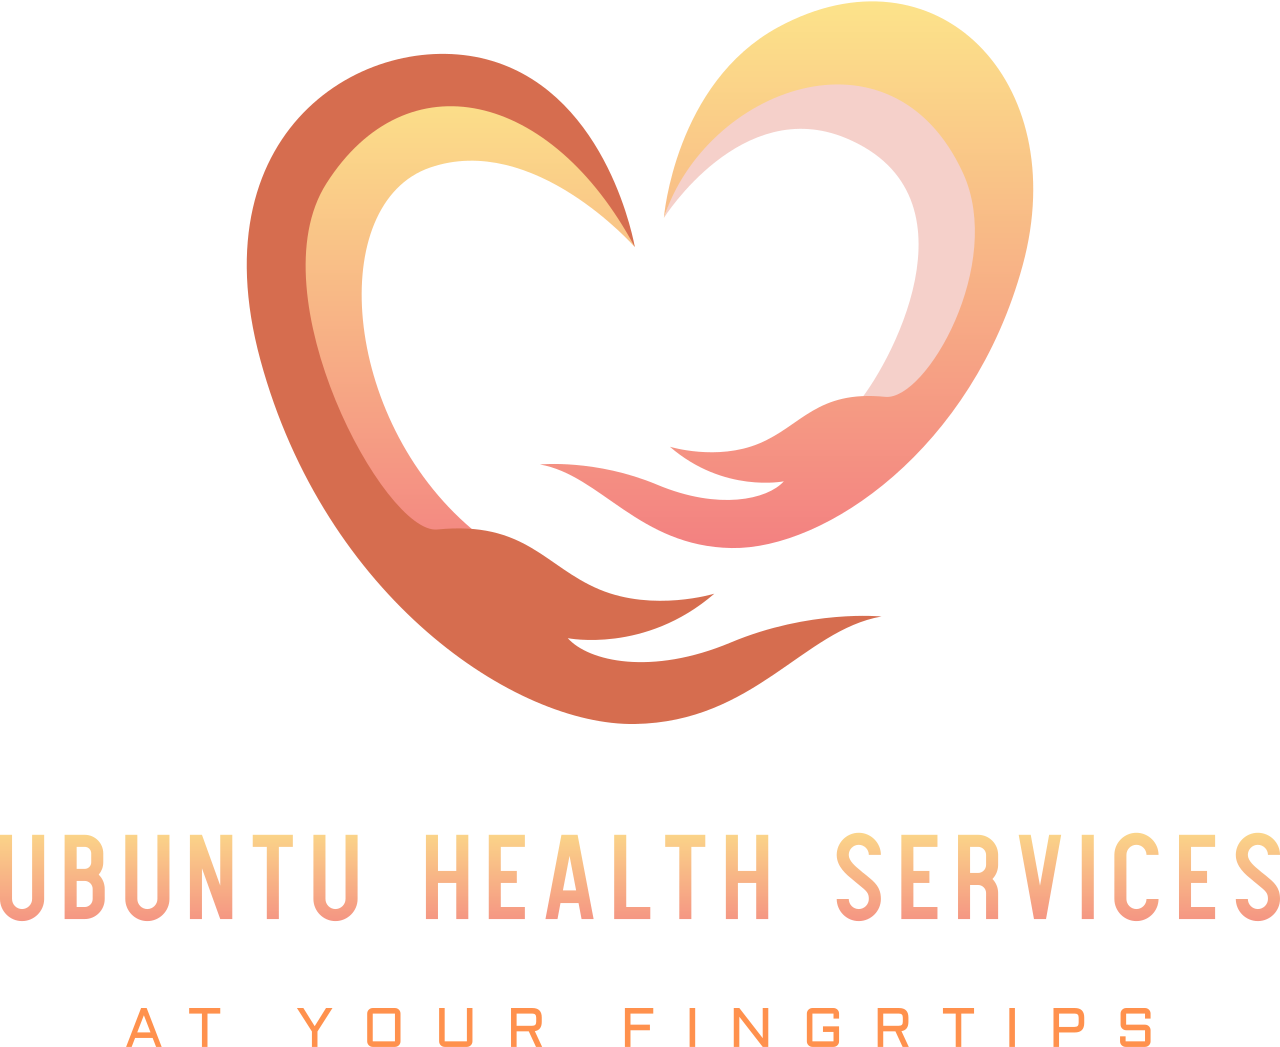 Ubuntu Health Services's web page